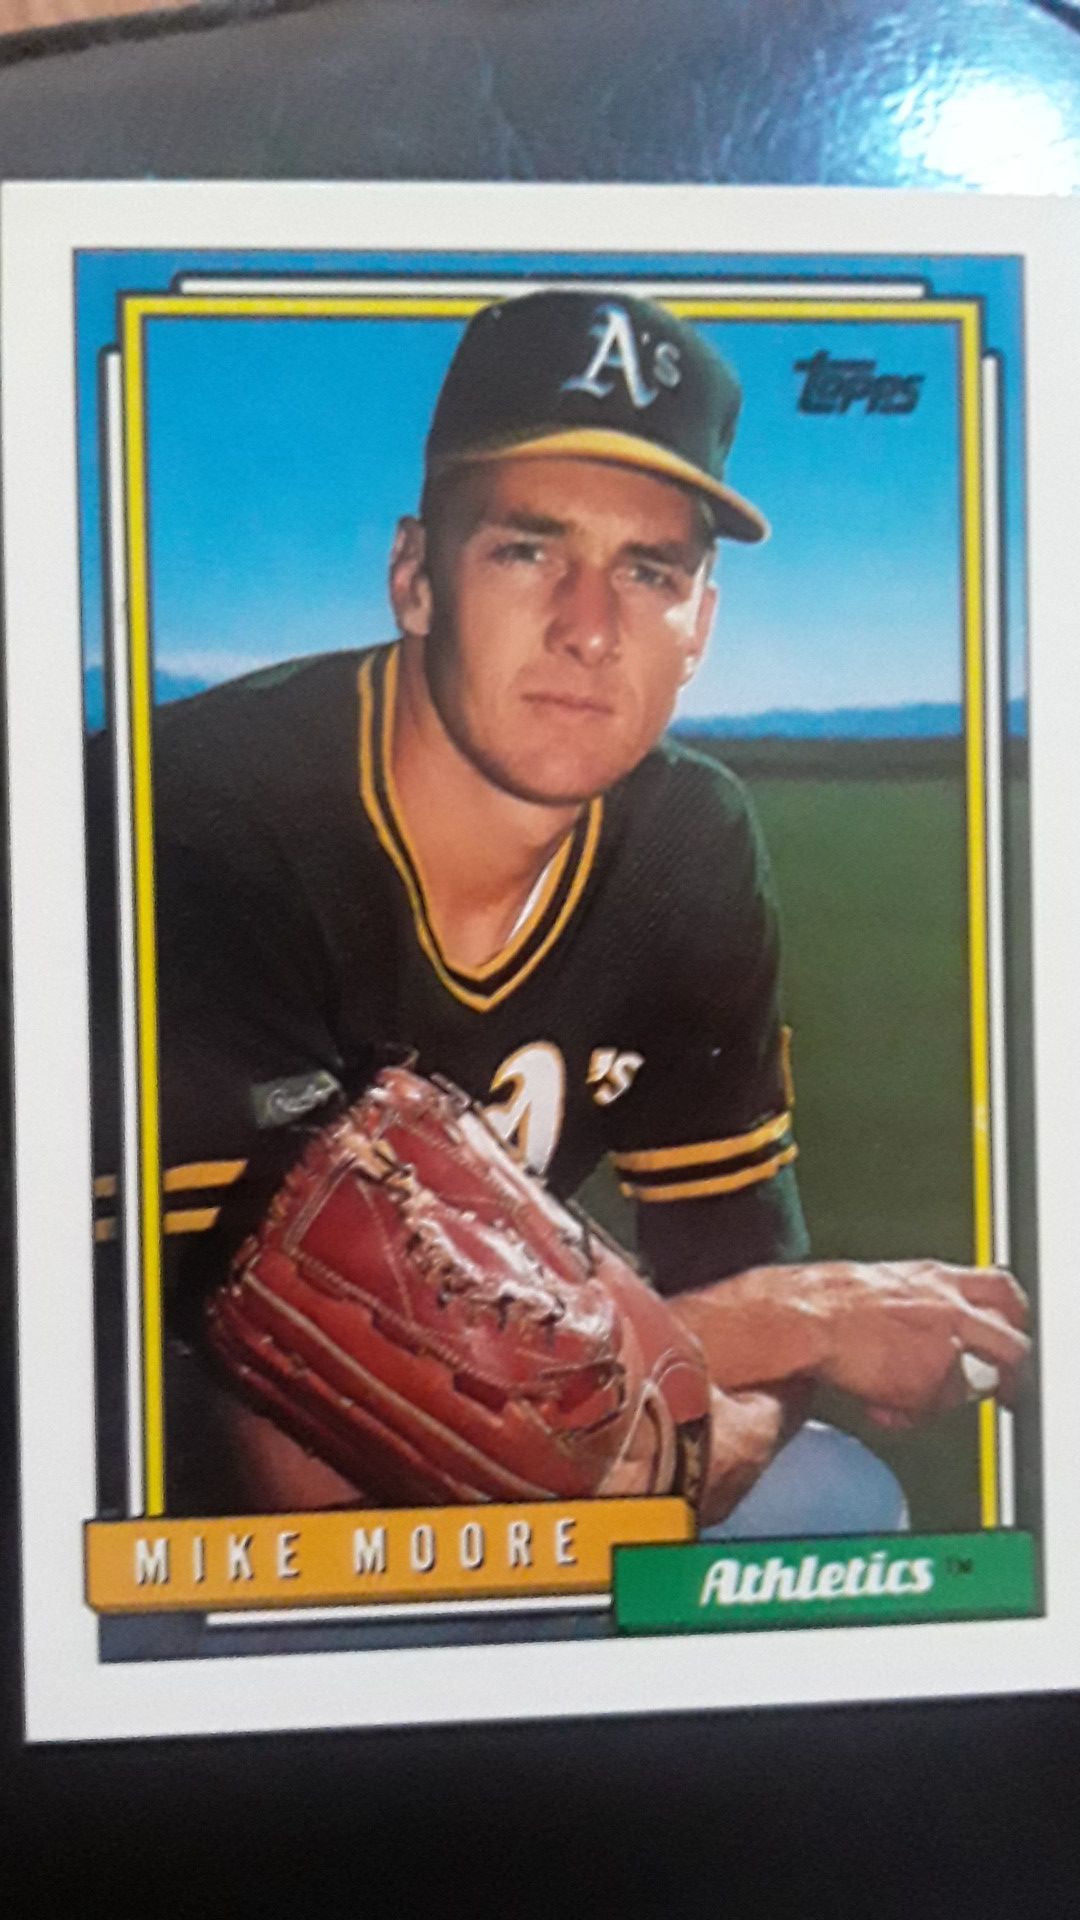 1992 Mike Moore 359 baseball card